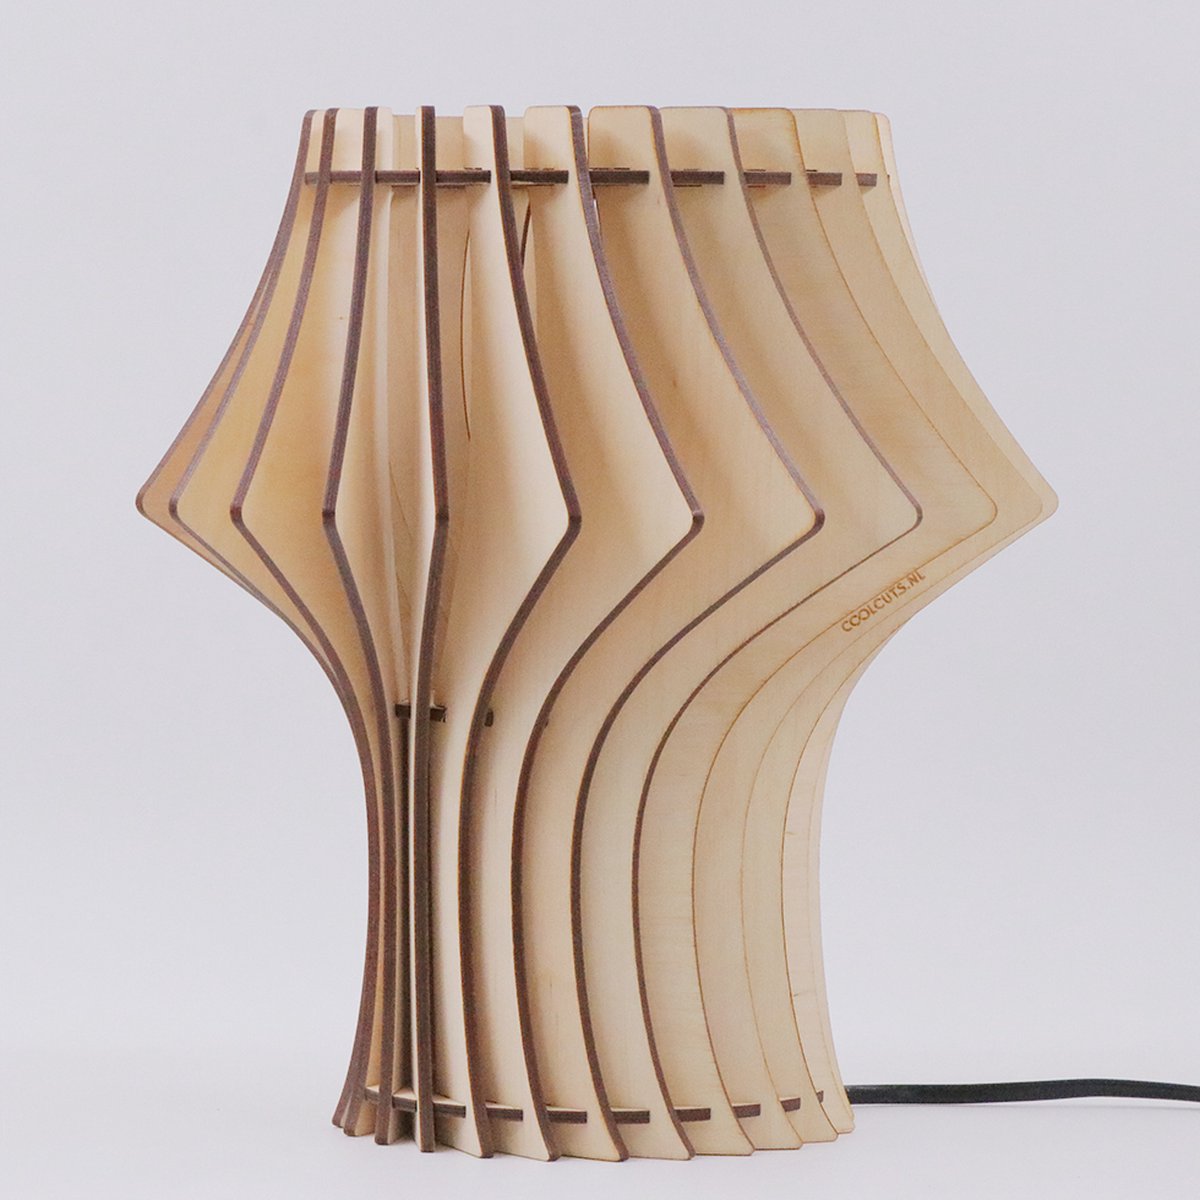 Tafellamp Suillus Mini Ø25 cm blankhout - Houten tafellamp - Dutch Design - Verlichting voor woonkamer, eetkamer, of slaapkamer - Kant en klaar gemonteerde kamerlamp - CoolCuts